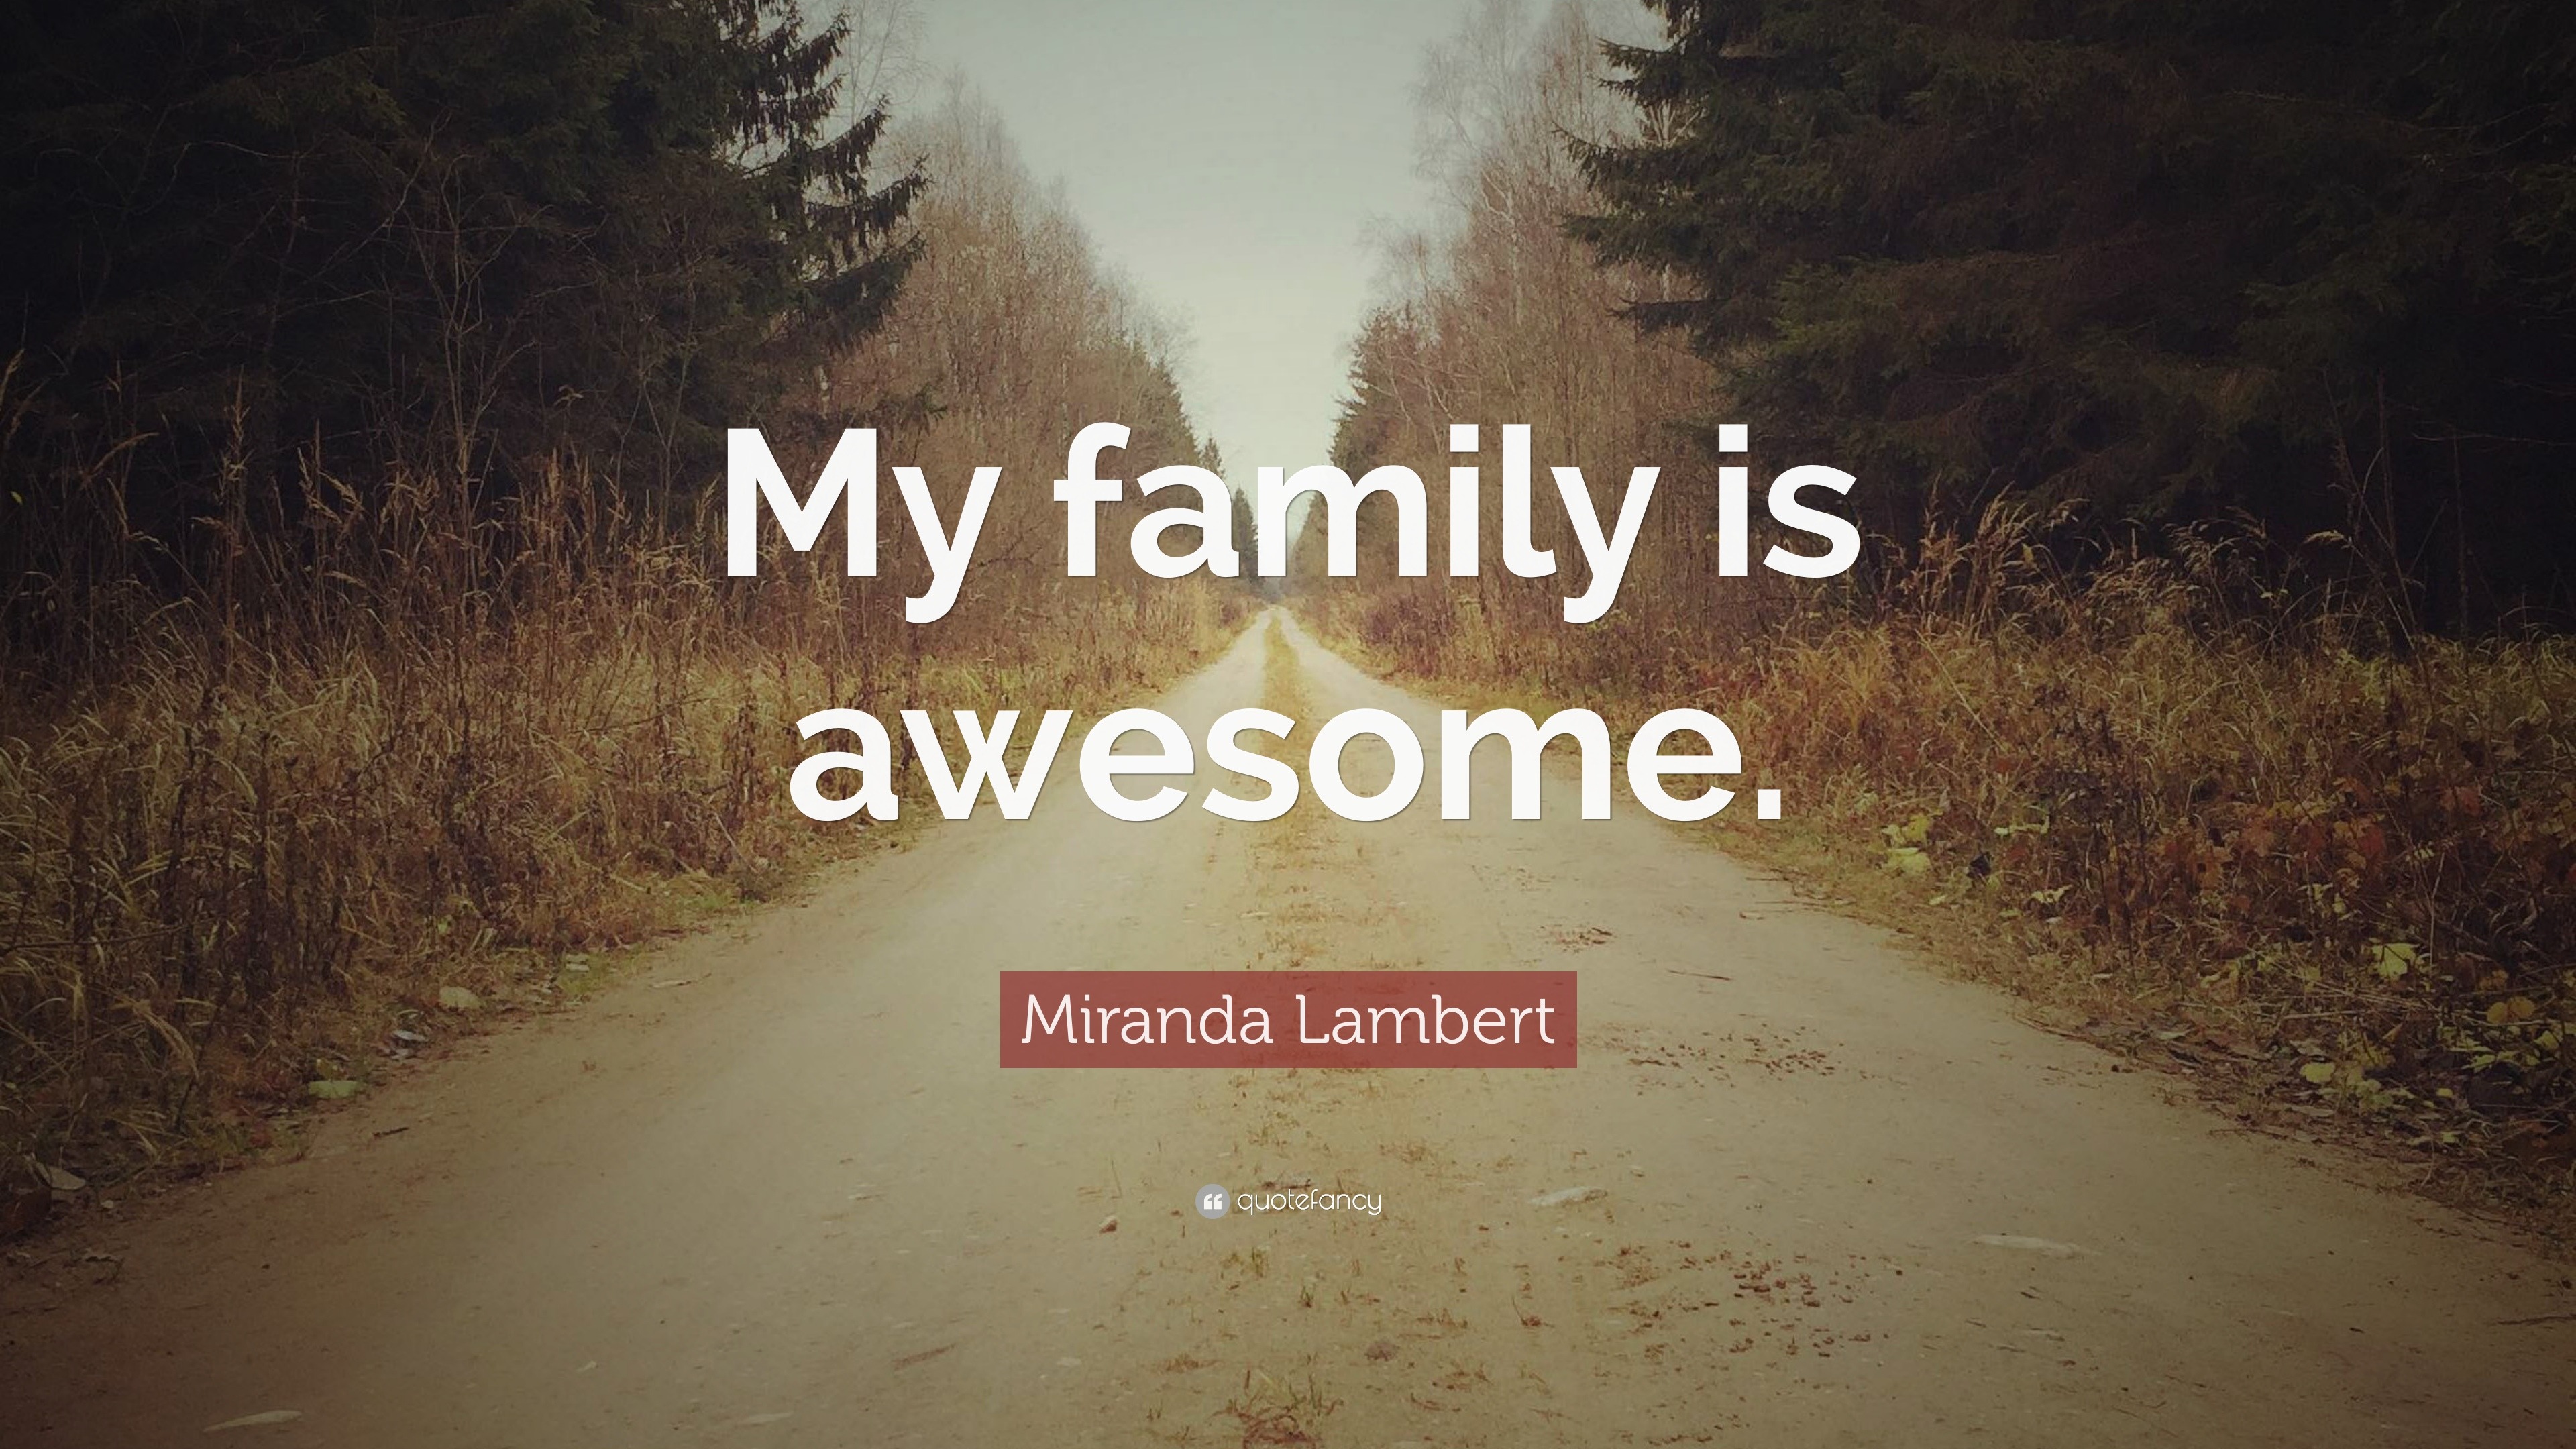 Miranda Lambert Quote  My family  is awesome  